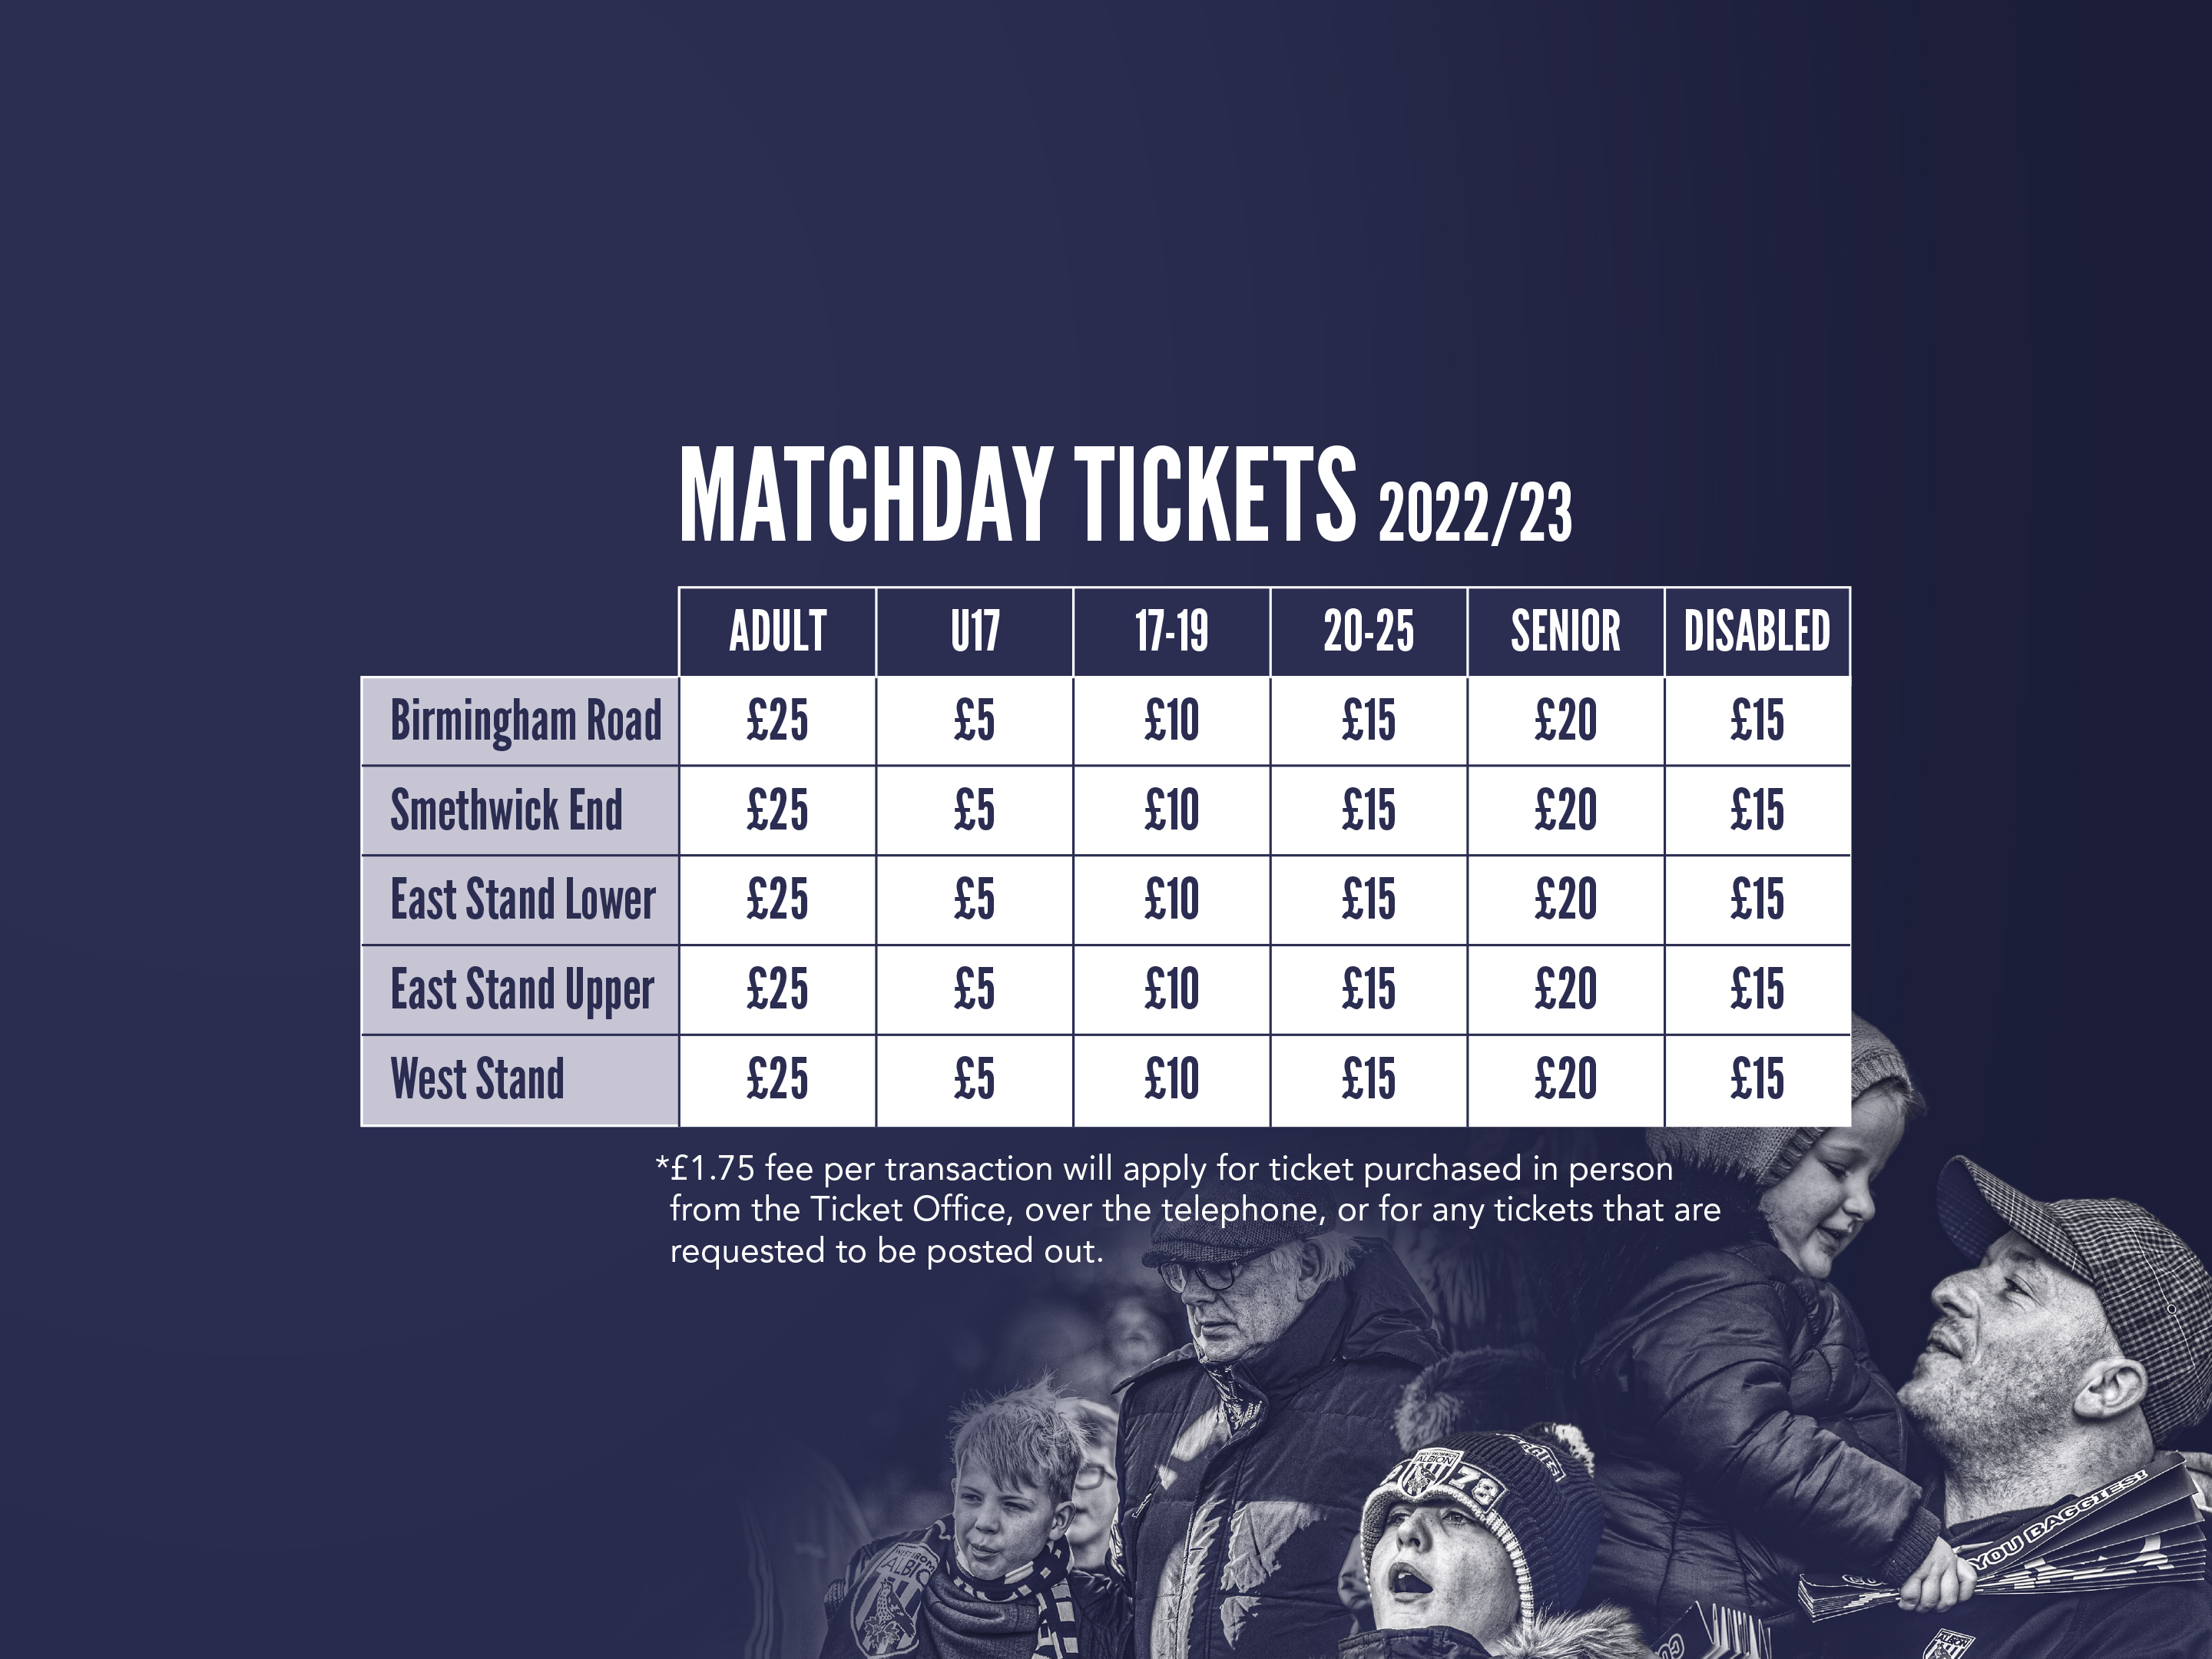 2022/23 match ticket prices